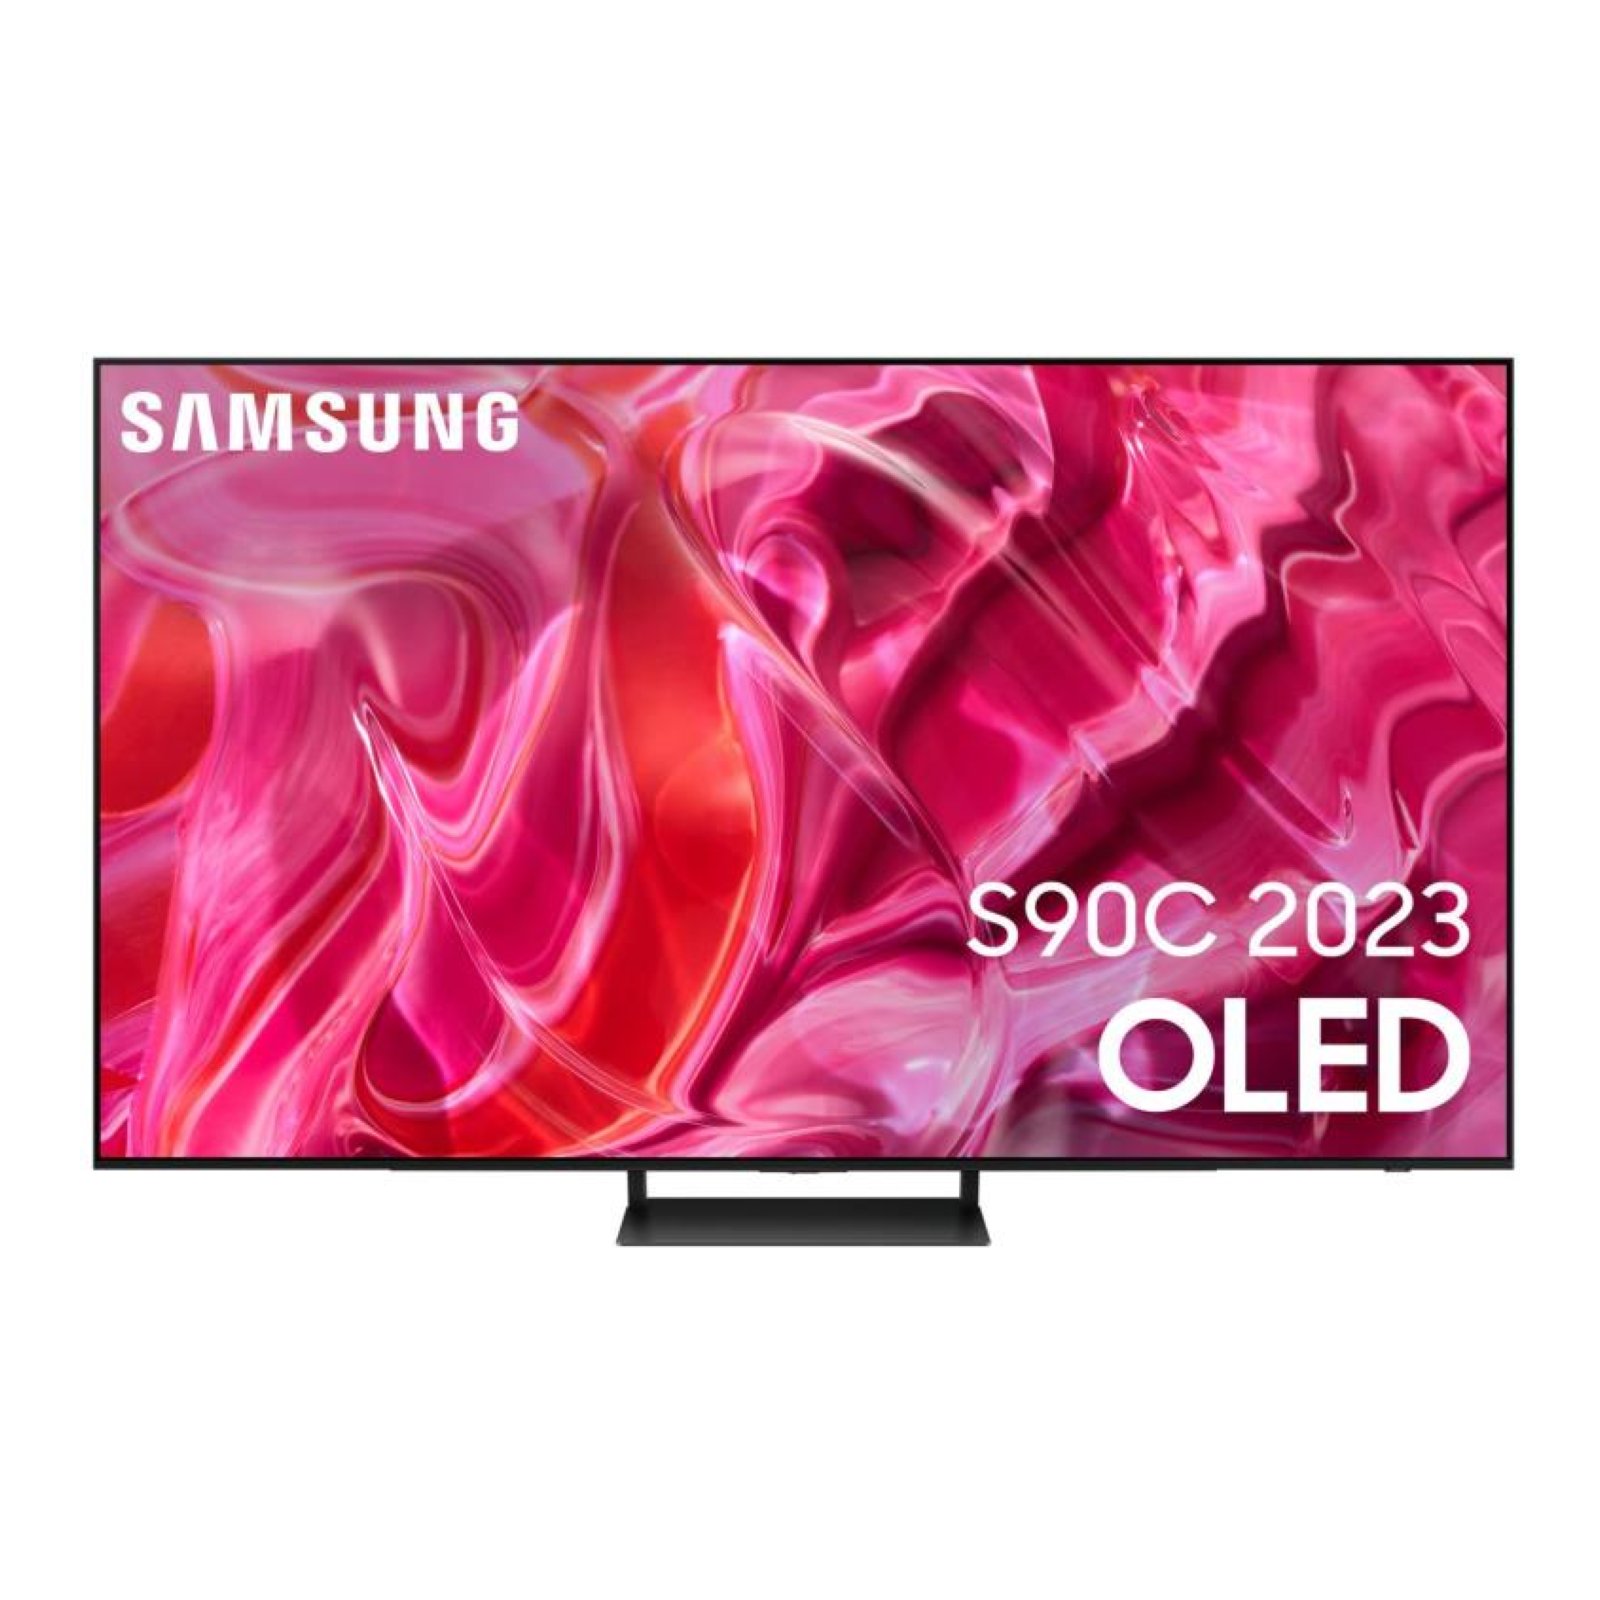 SAMSUNG TQ55S90C 2023 OLED TV